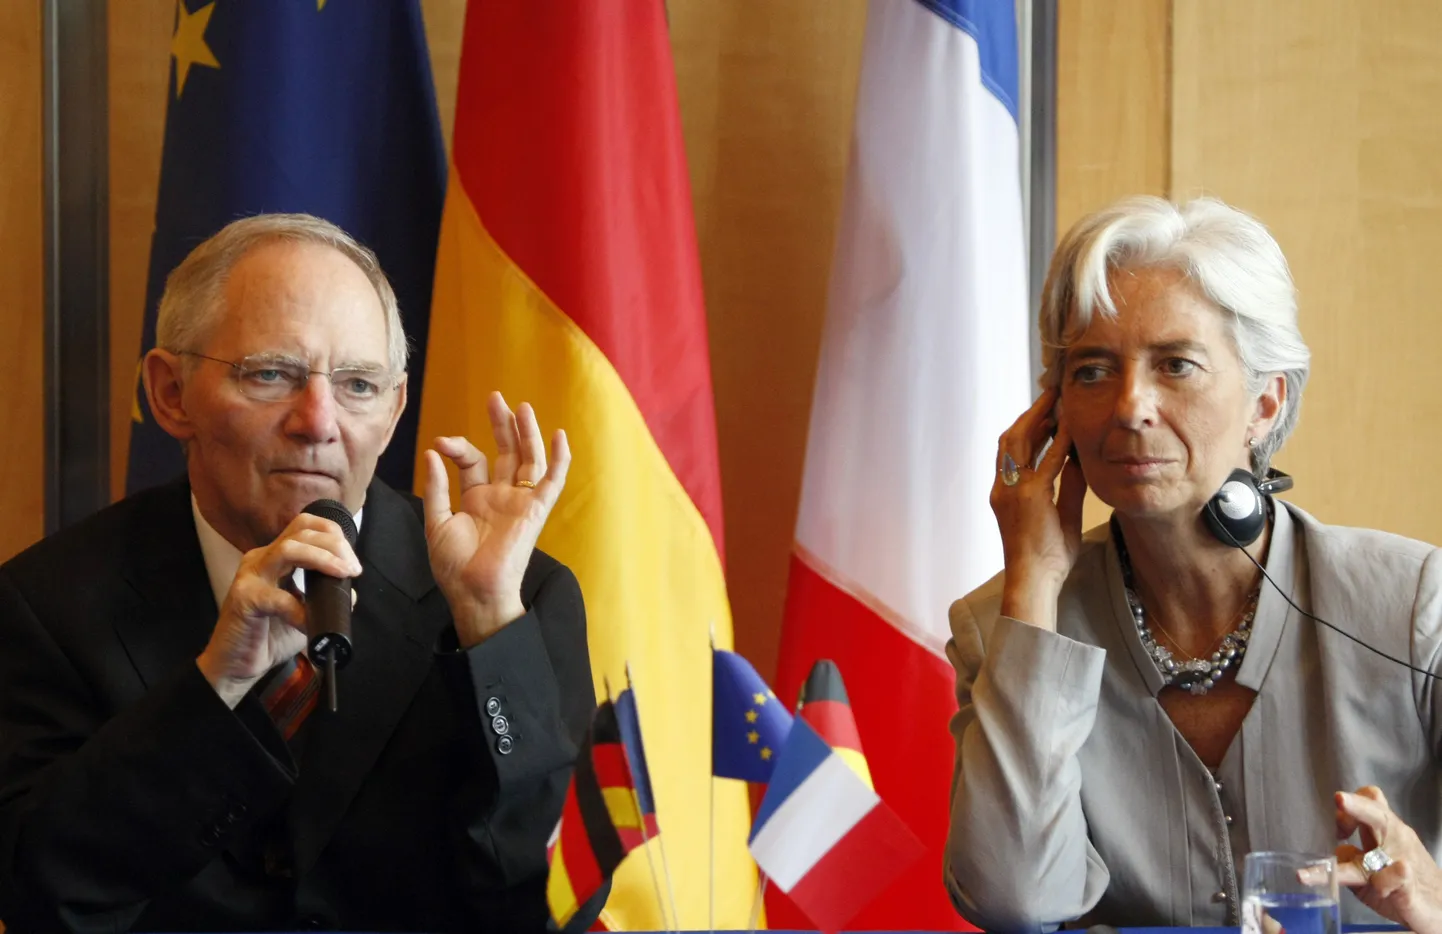 Prantsuse rahandusminister Chrstine Lagarde ja tema Saksamaa ametivend Wolfgang Schäuble pressikonverentsil.